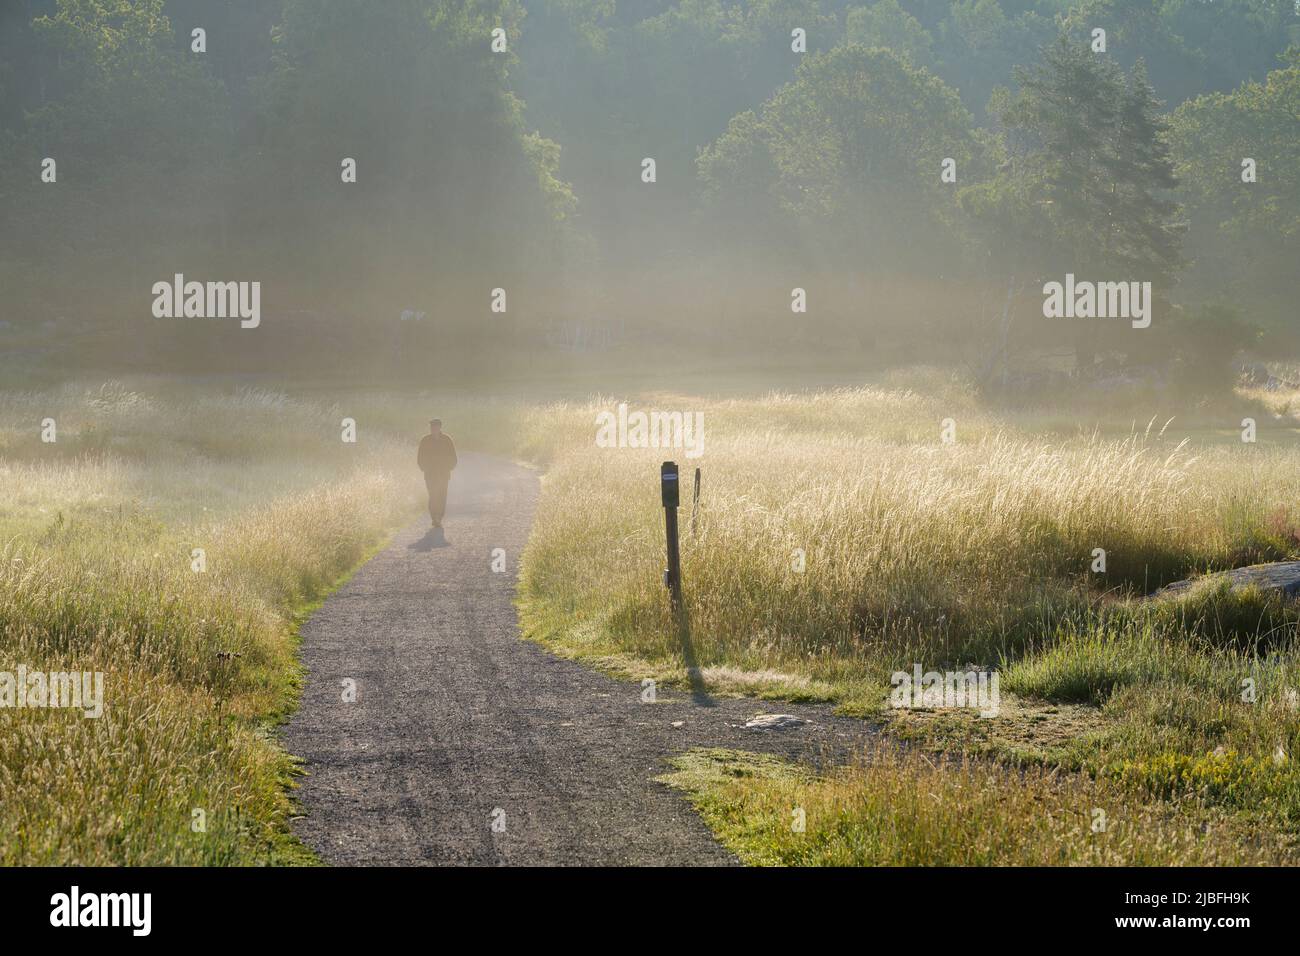 Man walking on path under fog Stock Photo